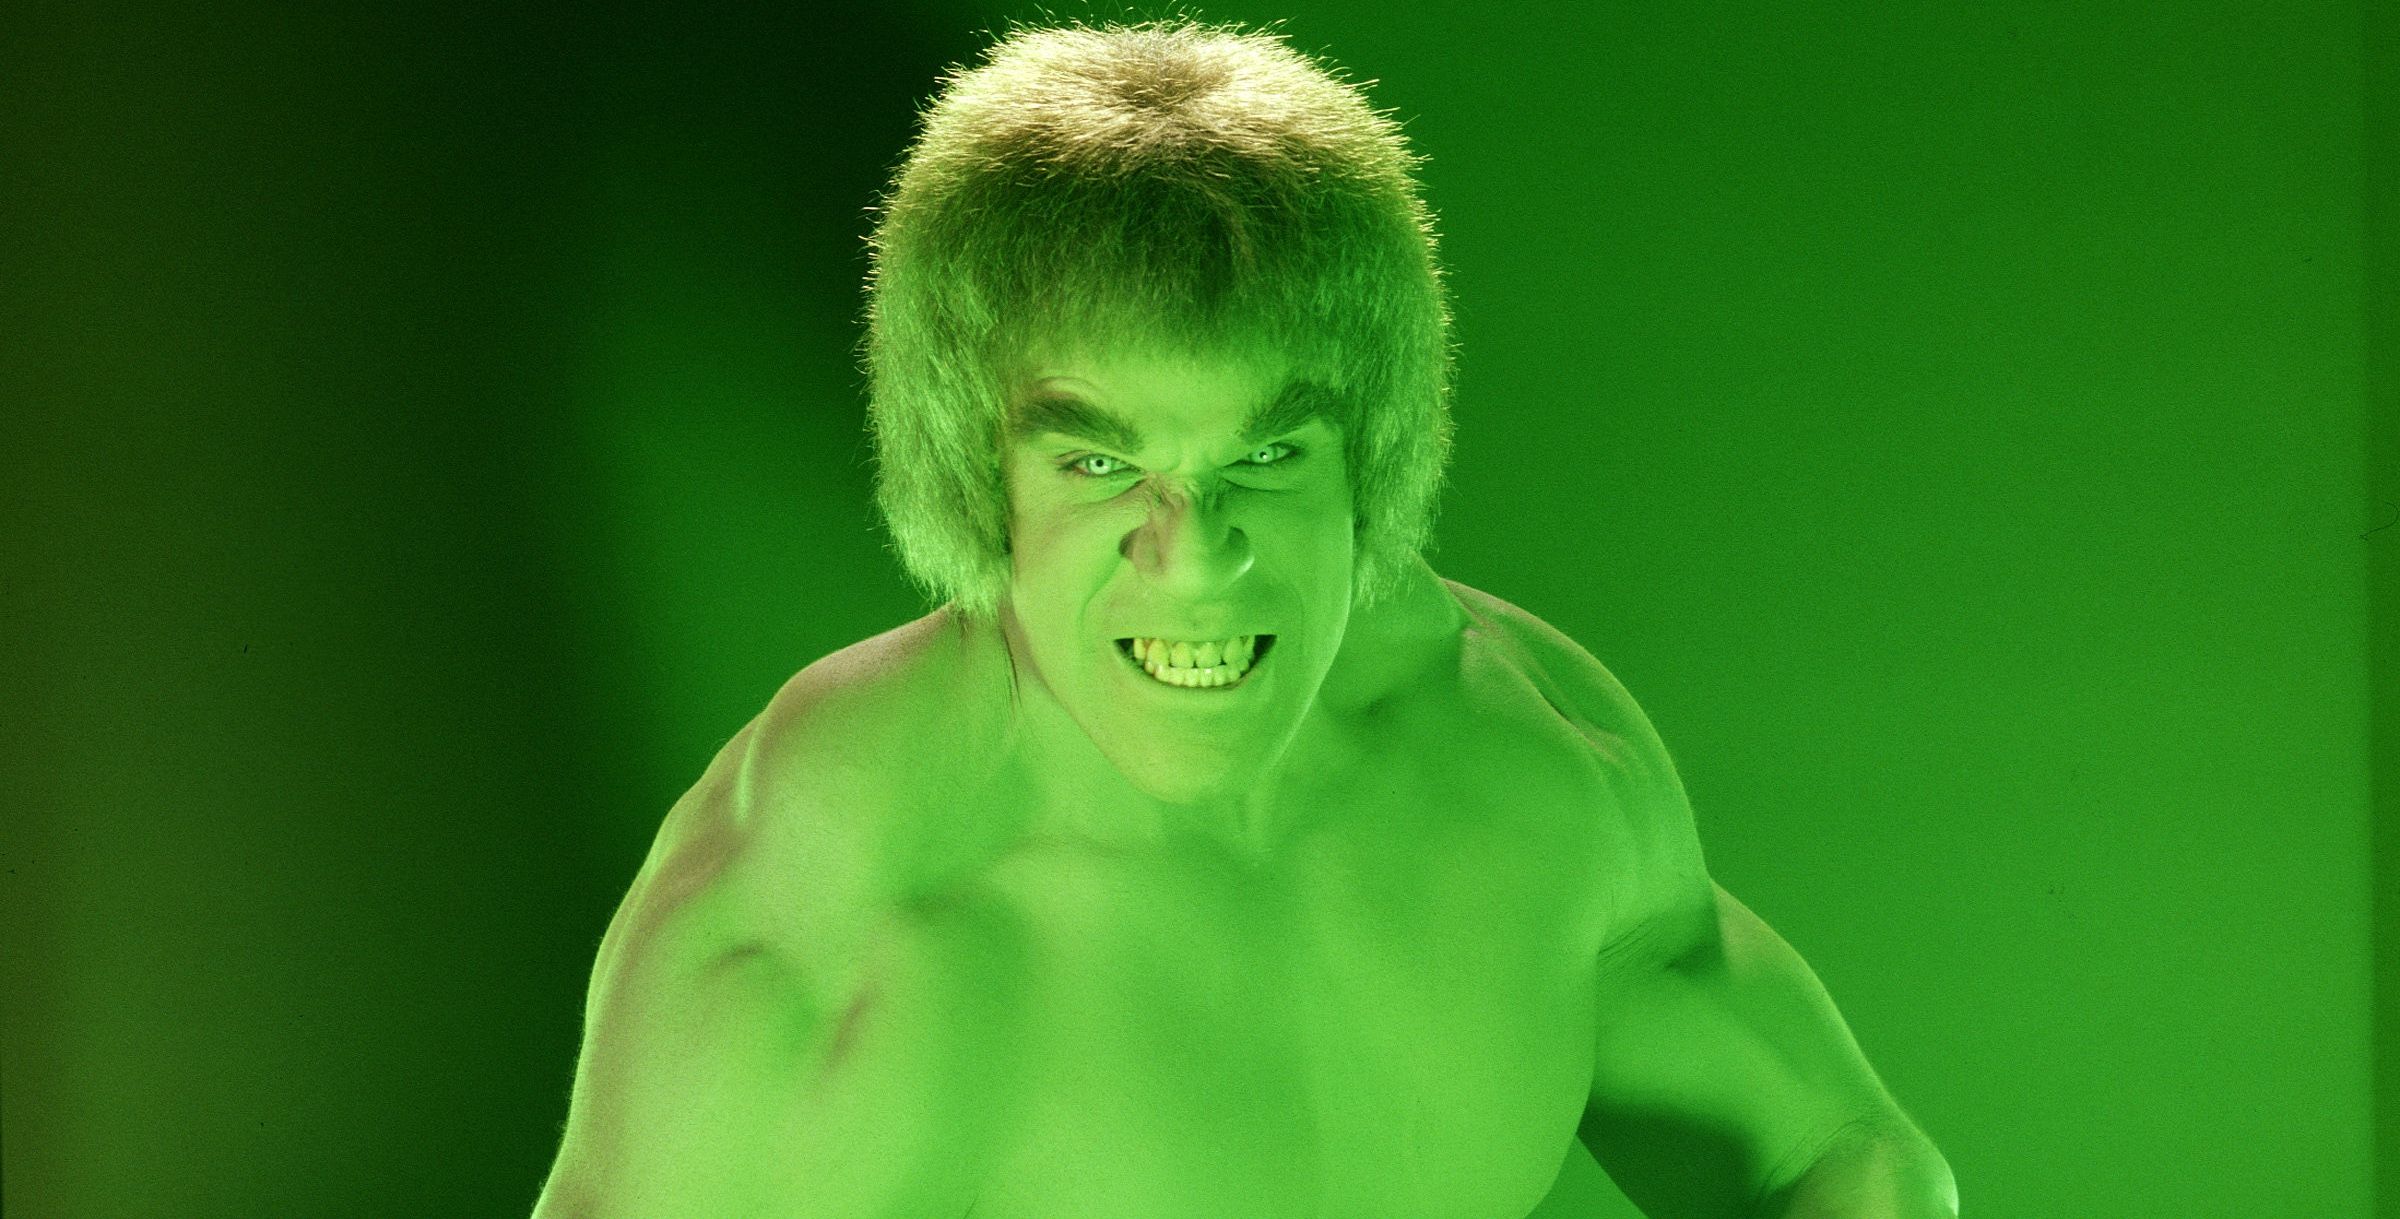 Lou Ferrigno The Incredible Hulk promo image